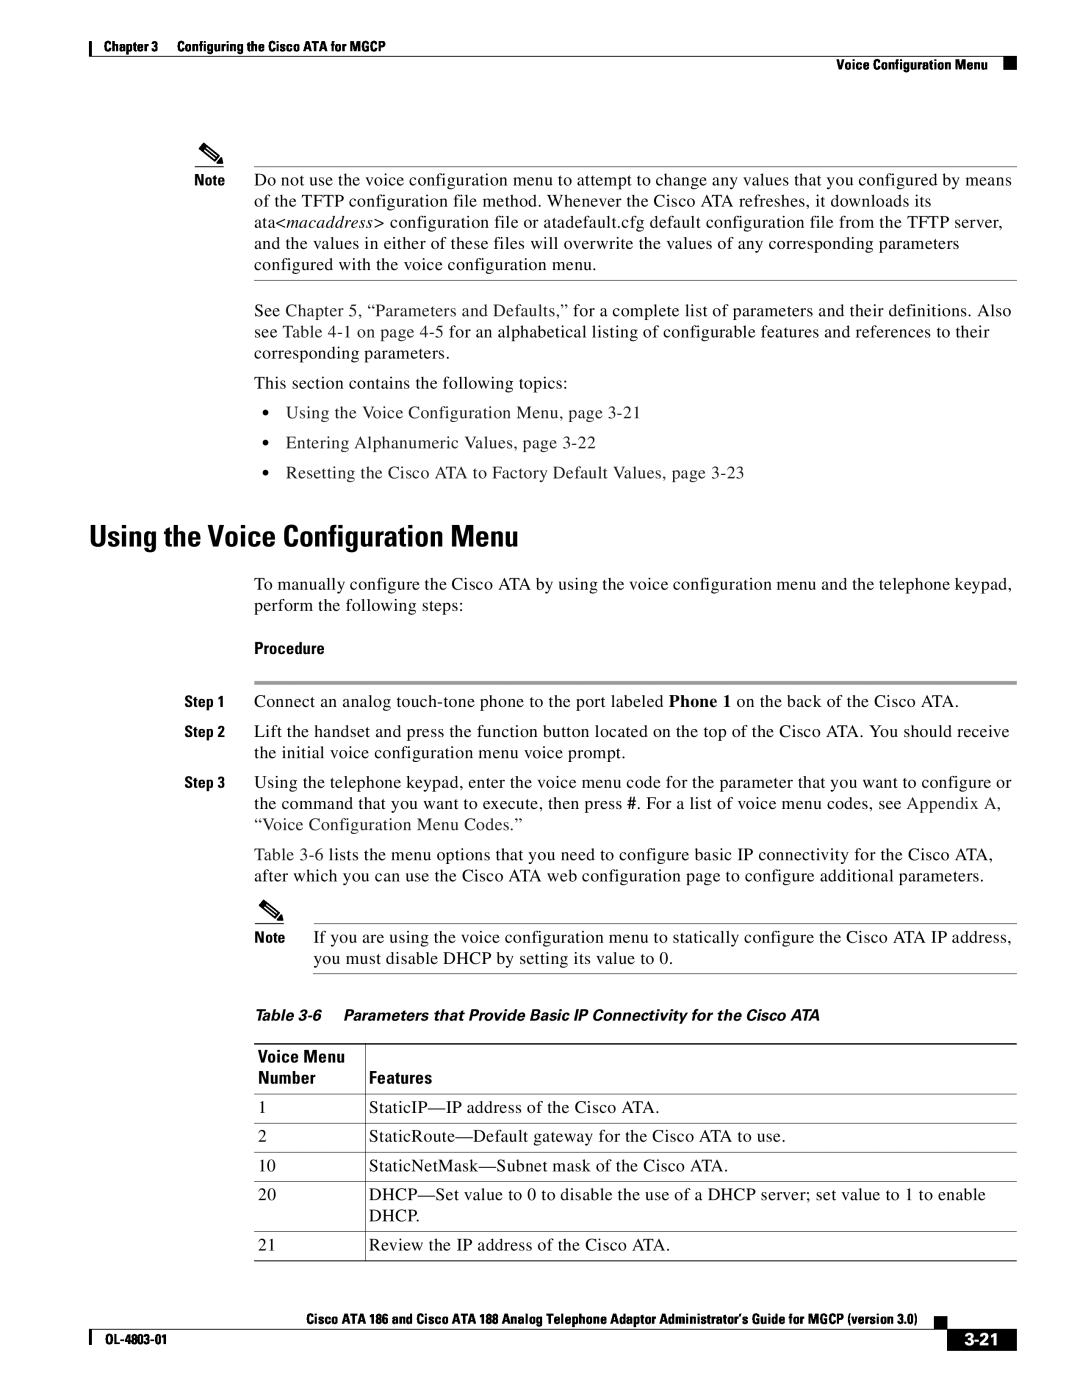 Cisco Systems ATA 186 Using the Voice Configuration Menu, page, Entering Alphanumeric Values, page, Voice Menu, Number 